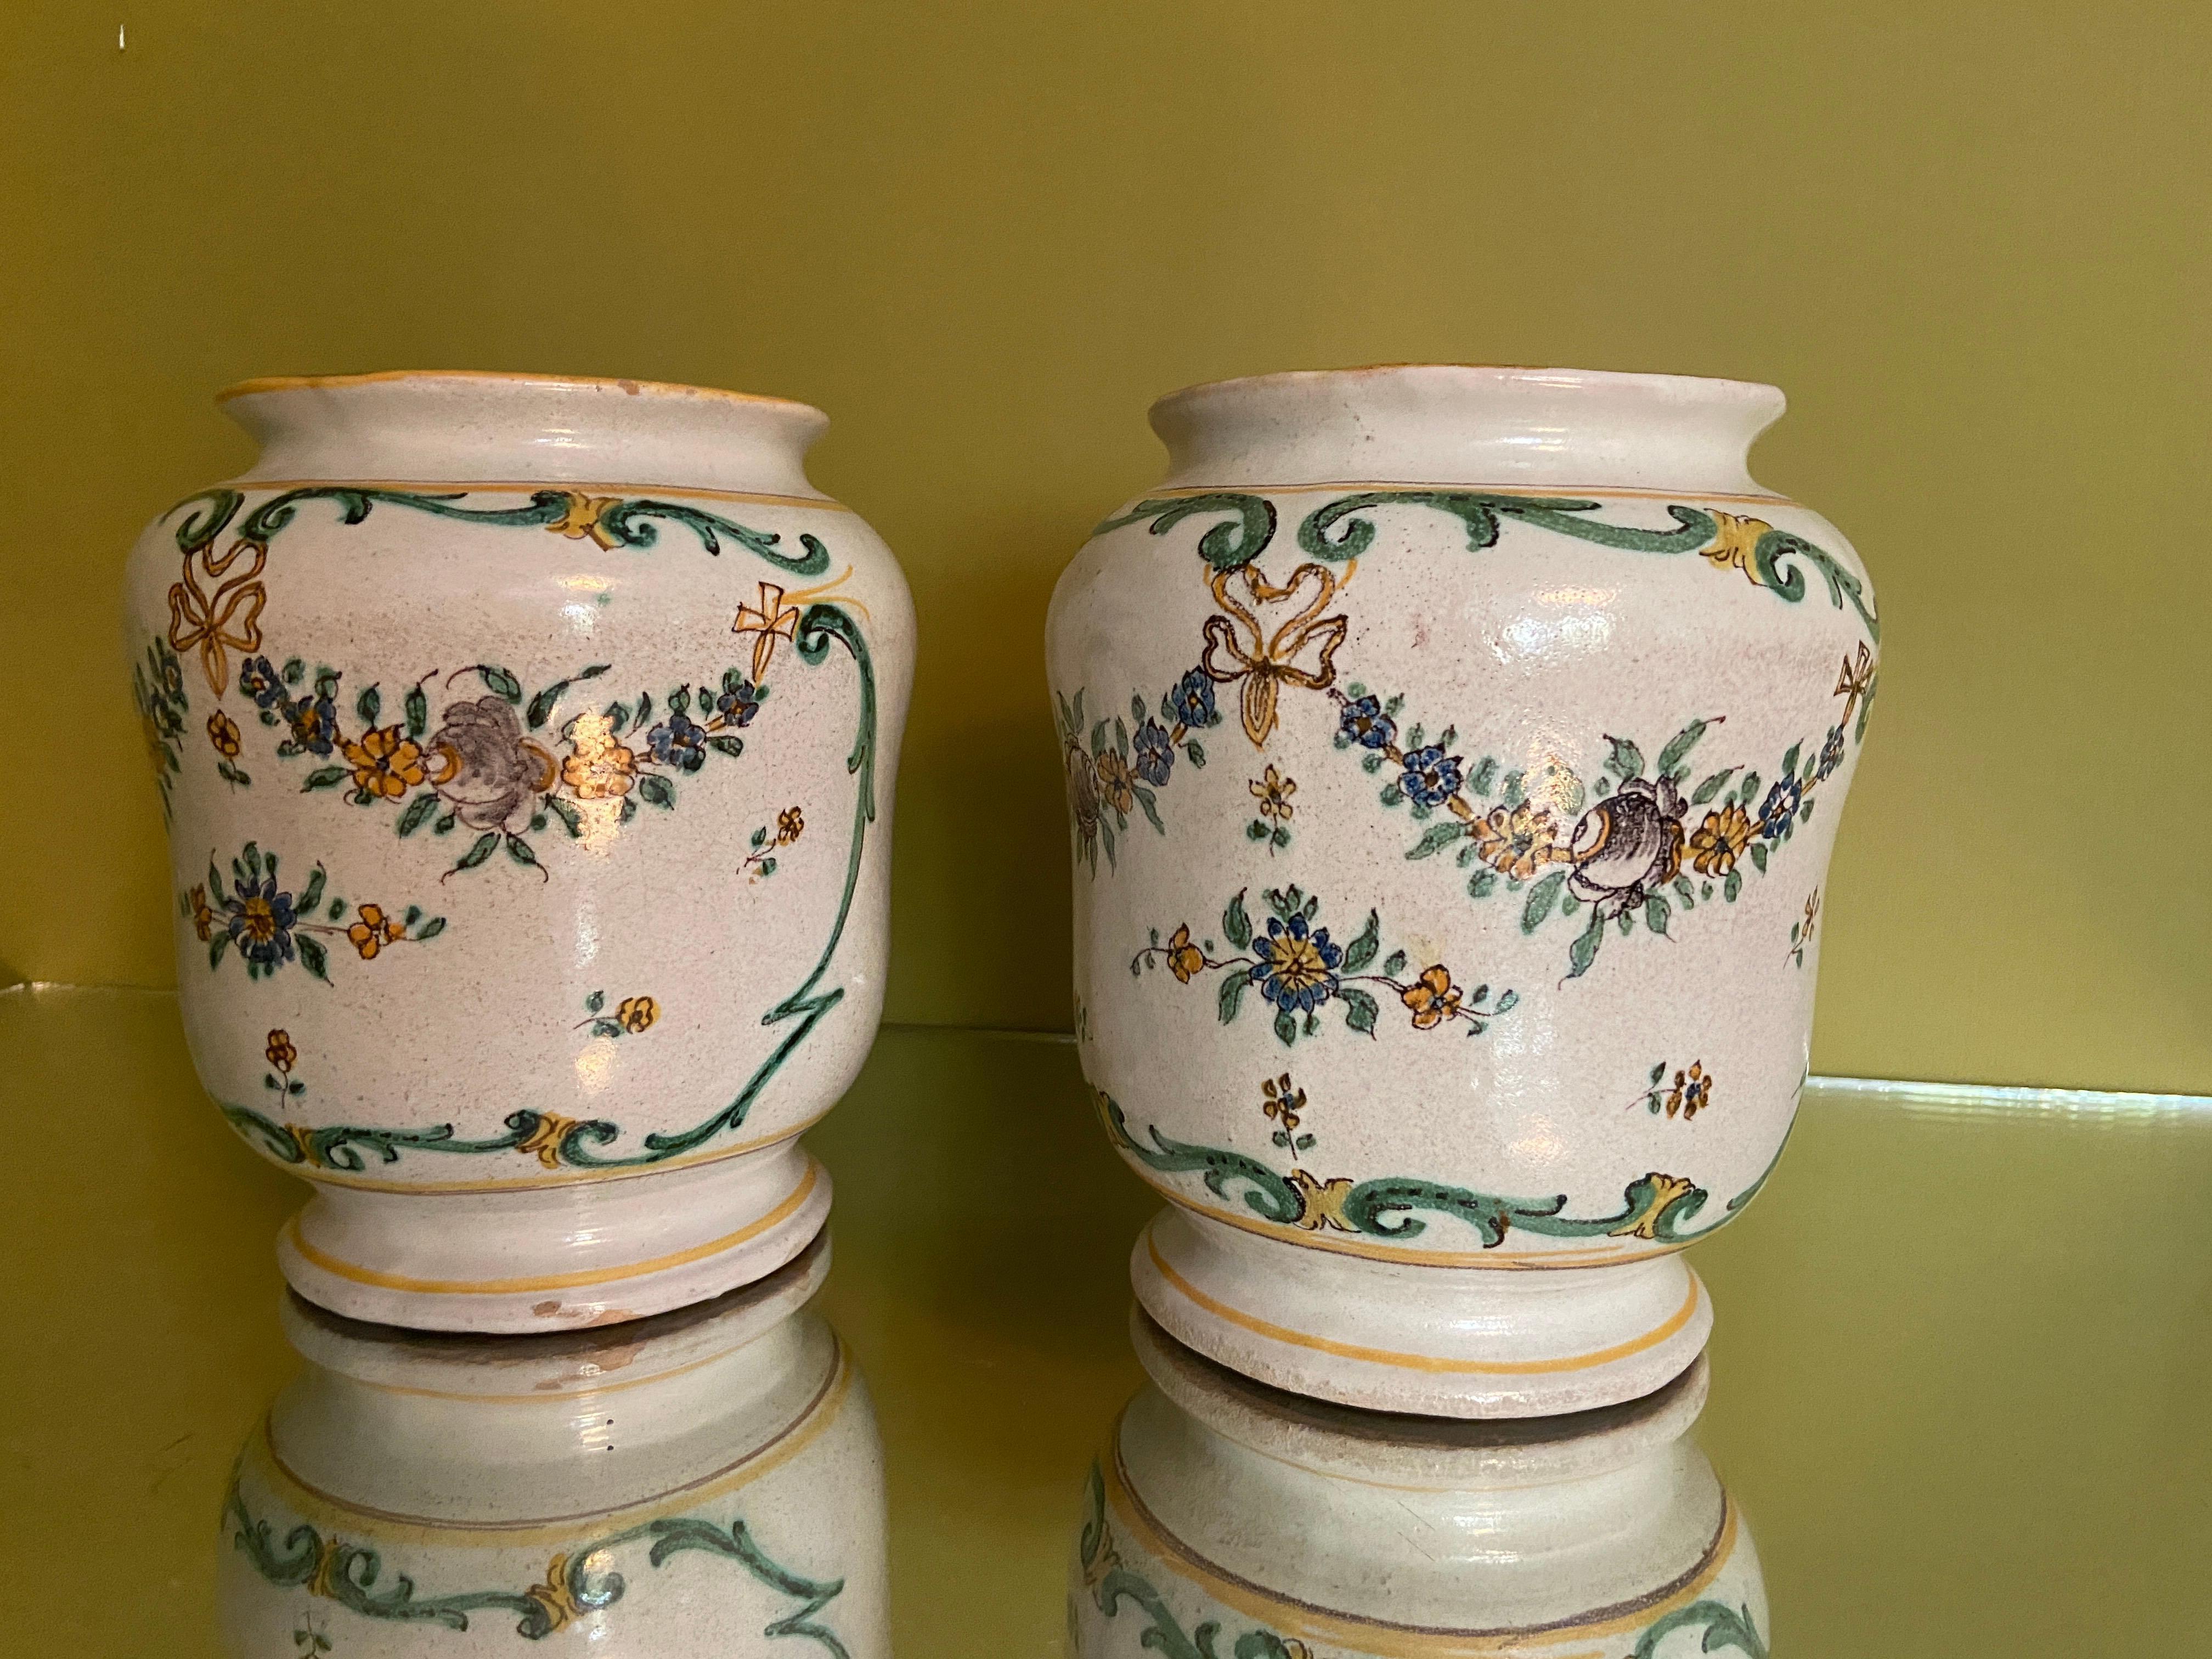 Antique Ceramic Pair of Vases with Flower Decorations, Italy 19th Century 1